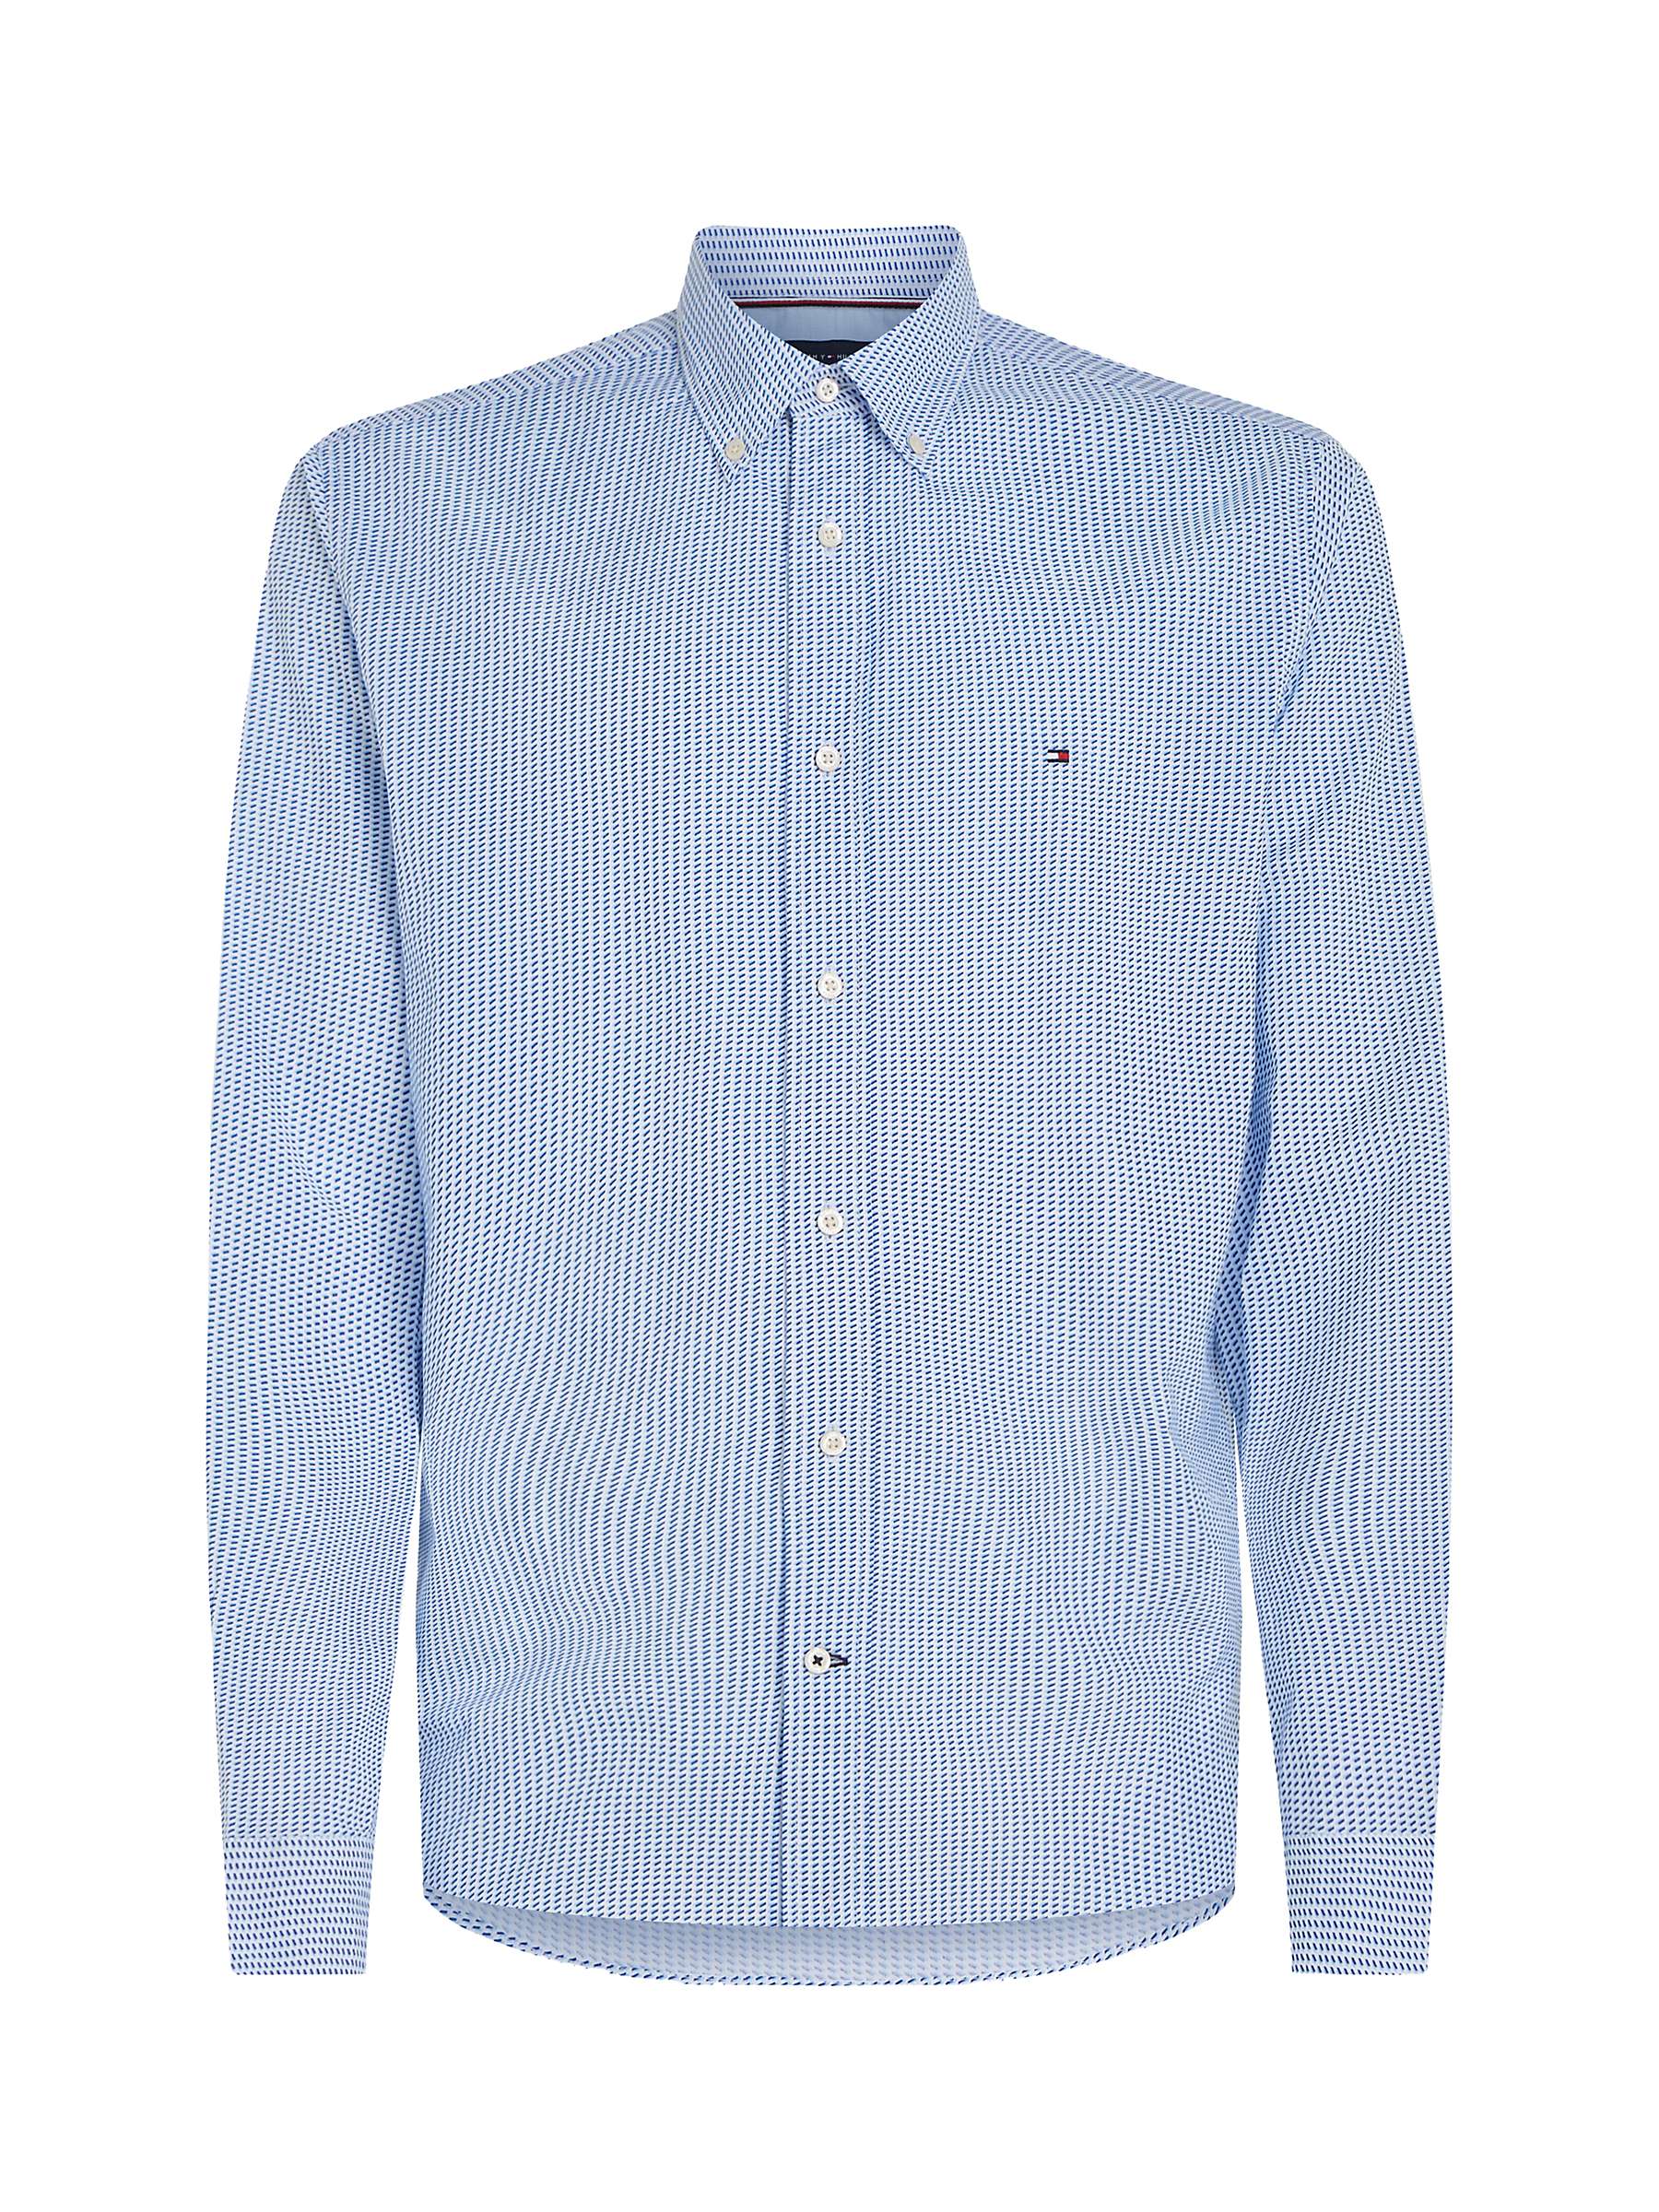 Tommy Hilfiger Soft Flex Print Shirt, Blue at John Lewis & Partners